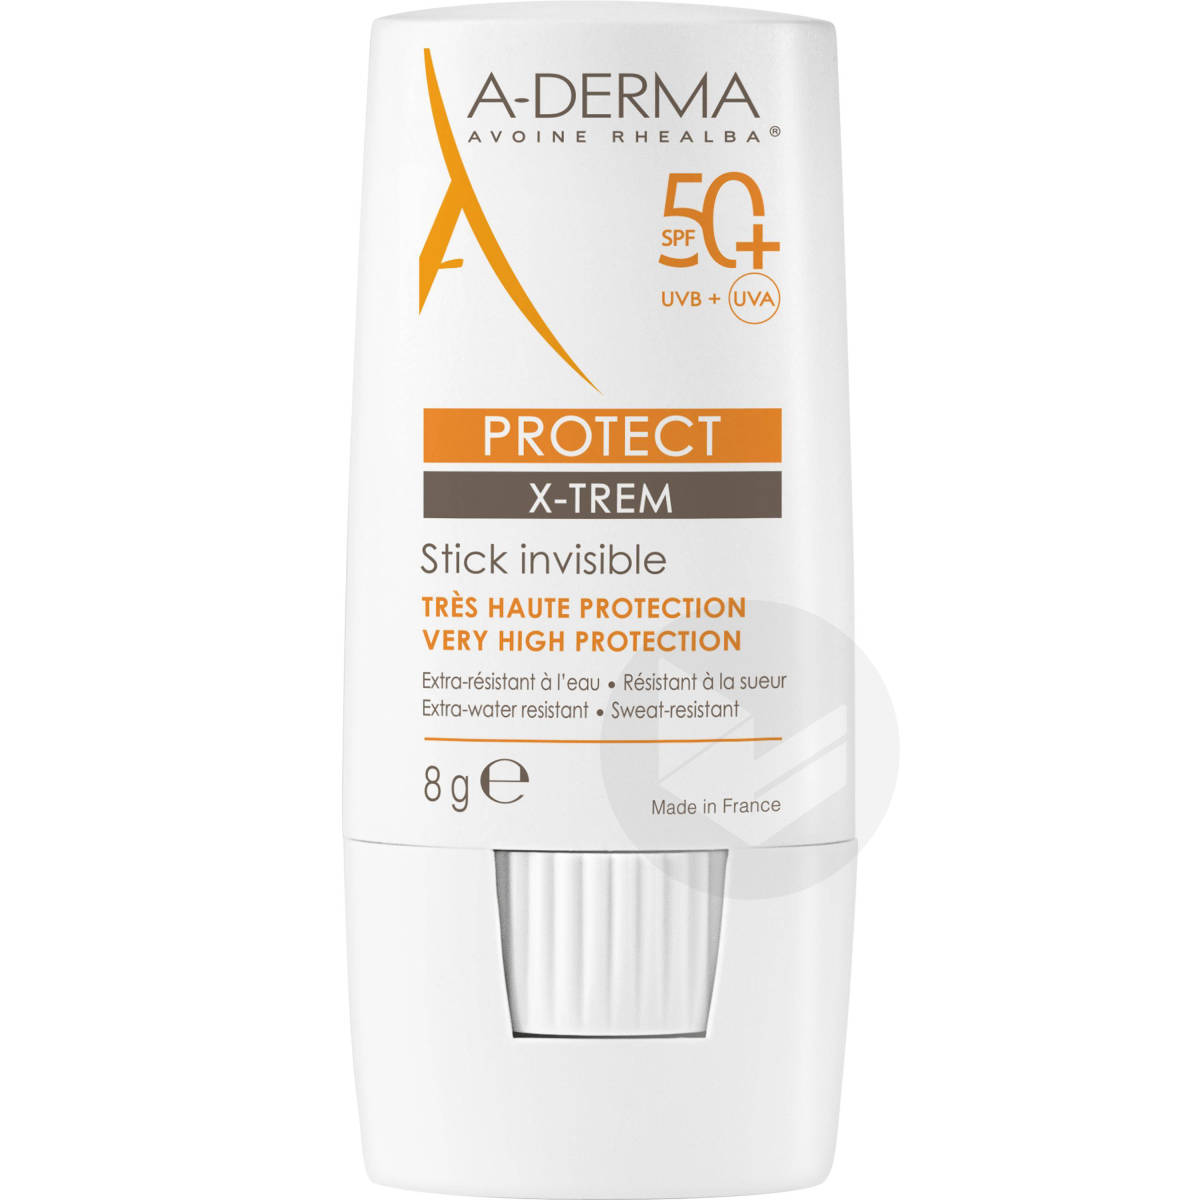 Protect AC A-Derma